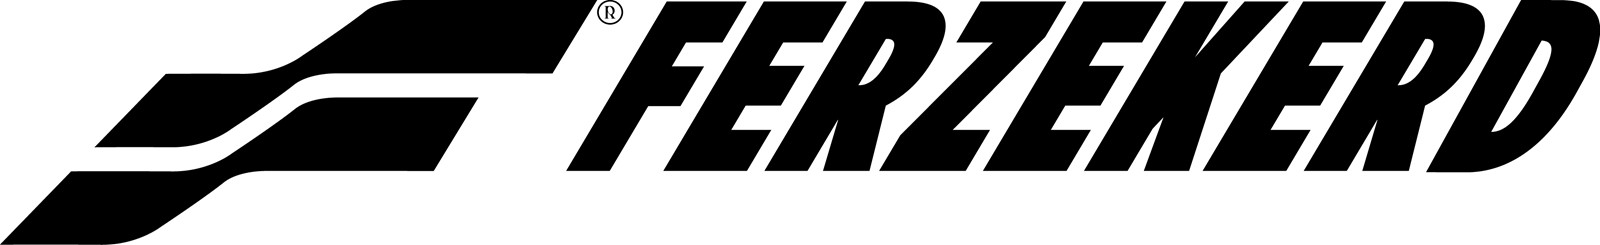 Logo van Ferzekerd